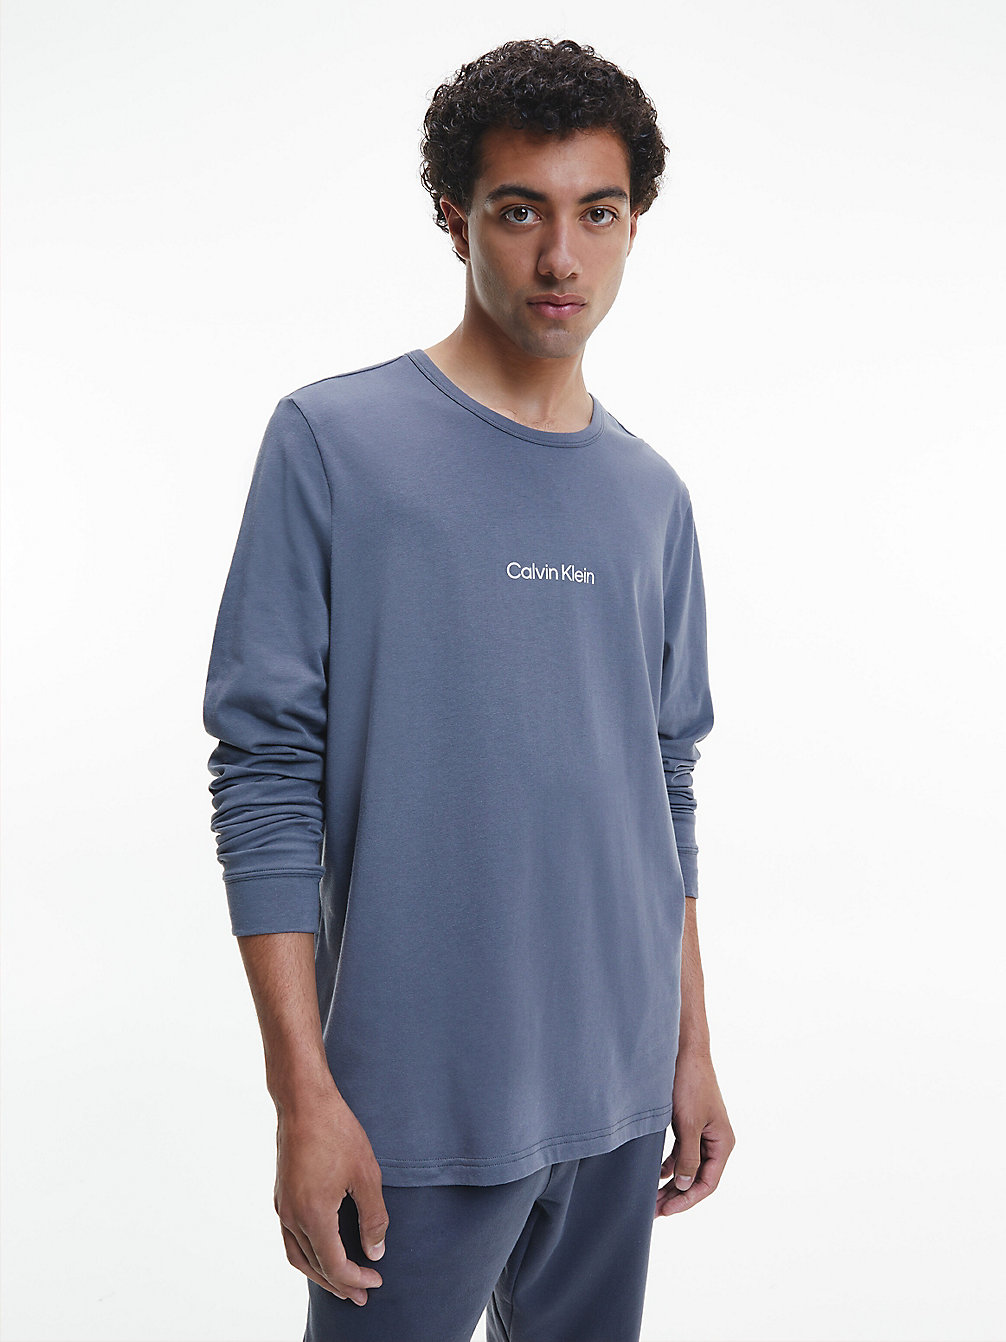 SLEEK GREY T-Shirt D'intérieur À Manches Longues - Modern Structure undefined hommes Calvin Klein